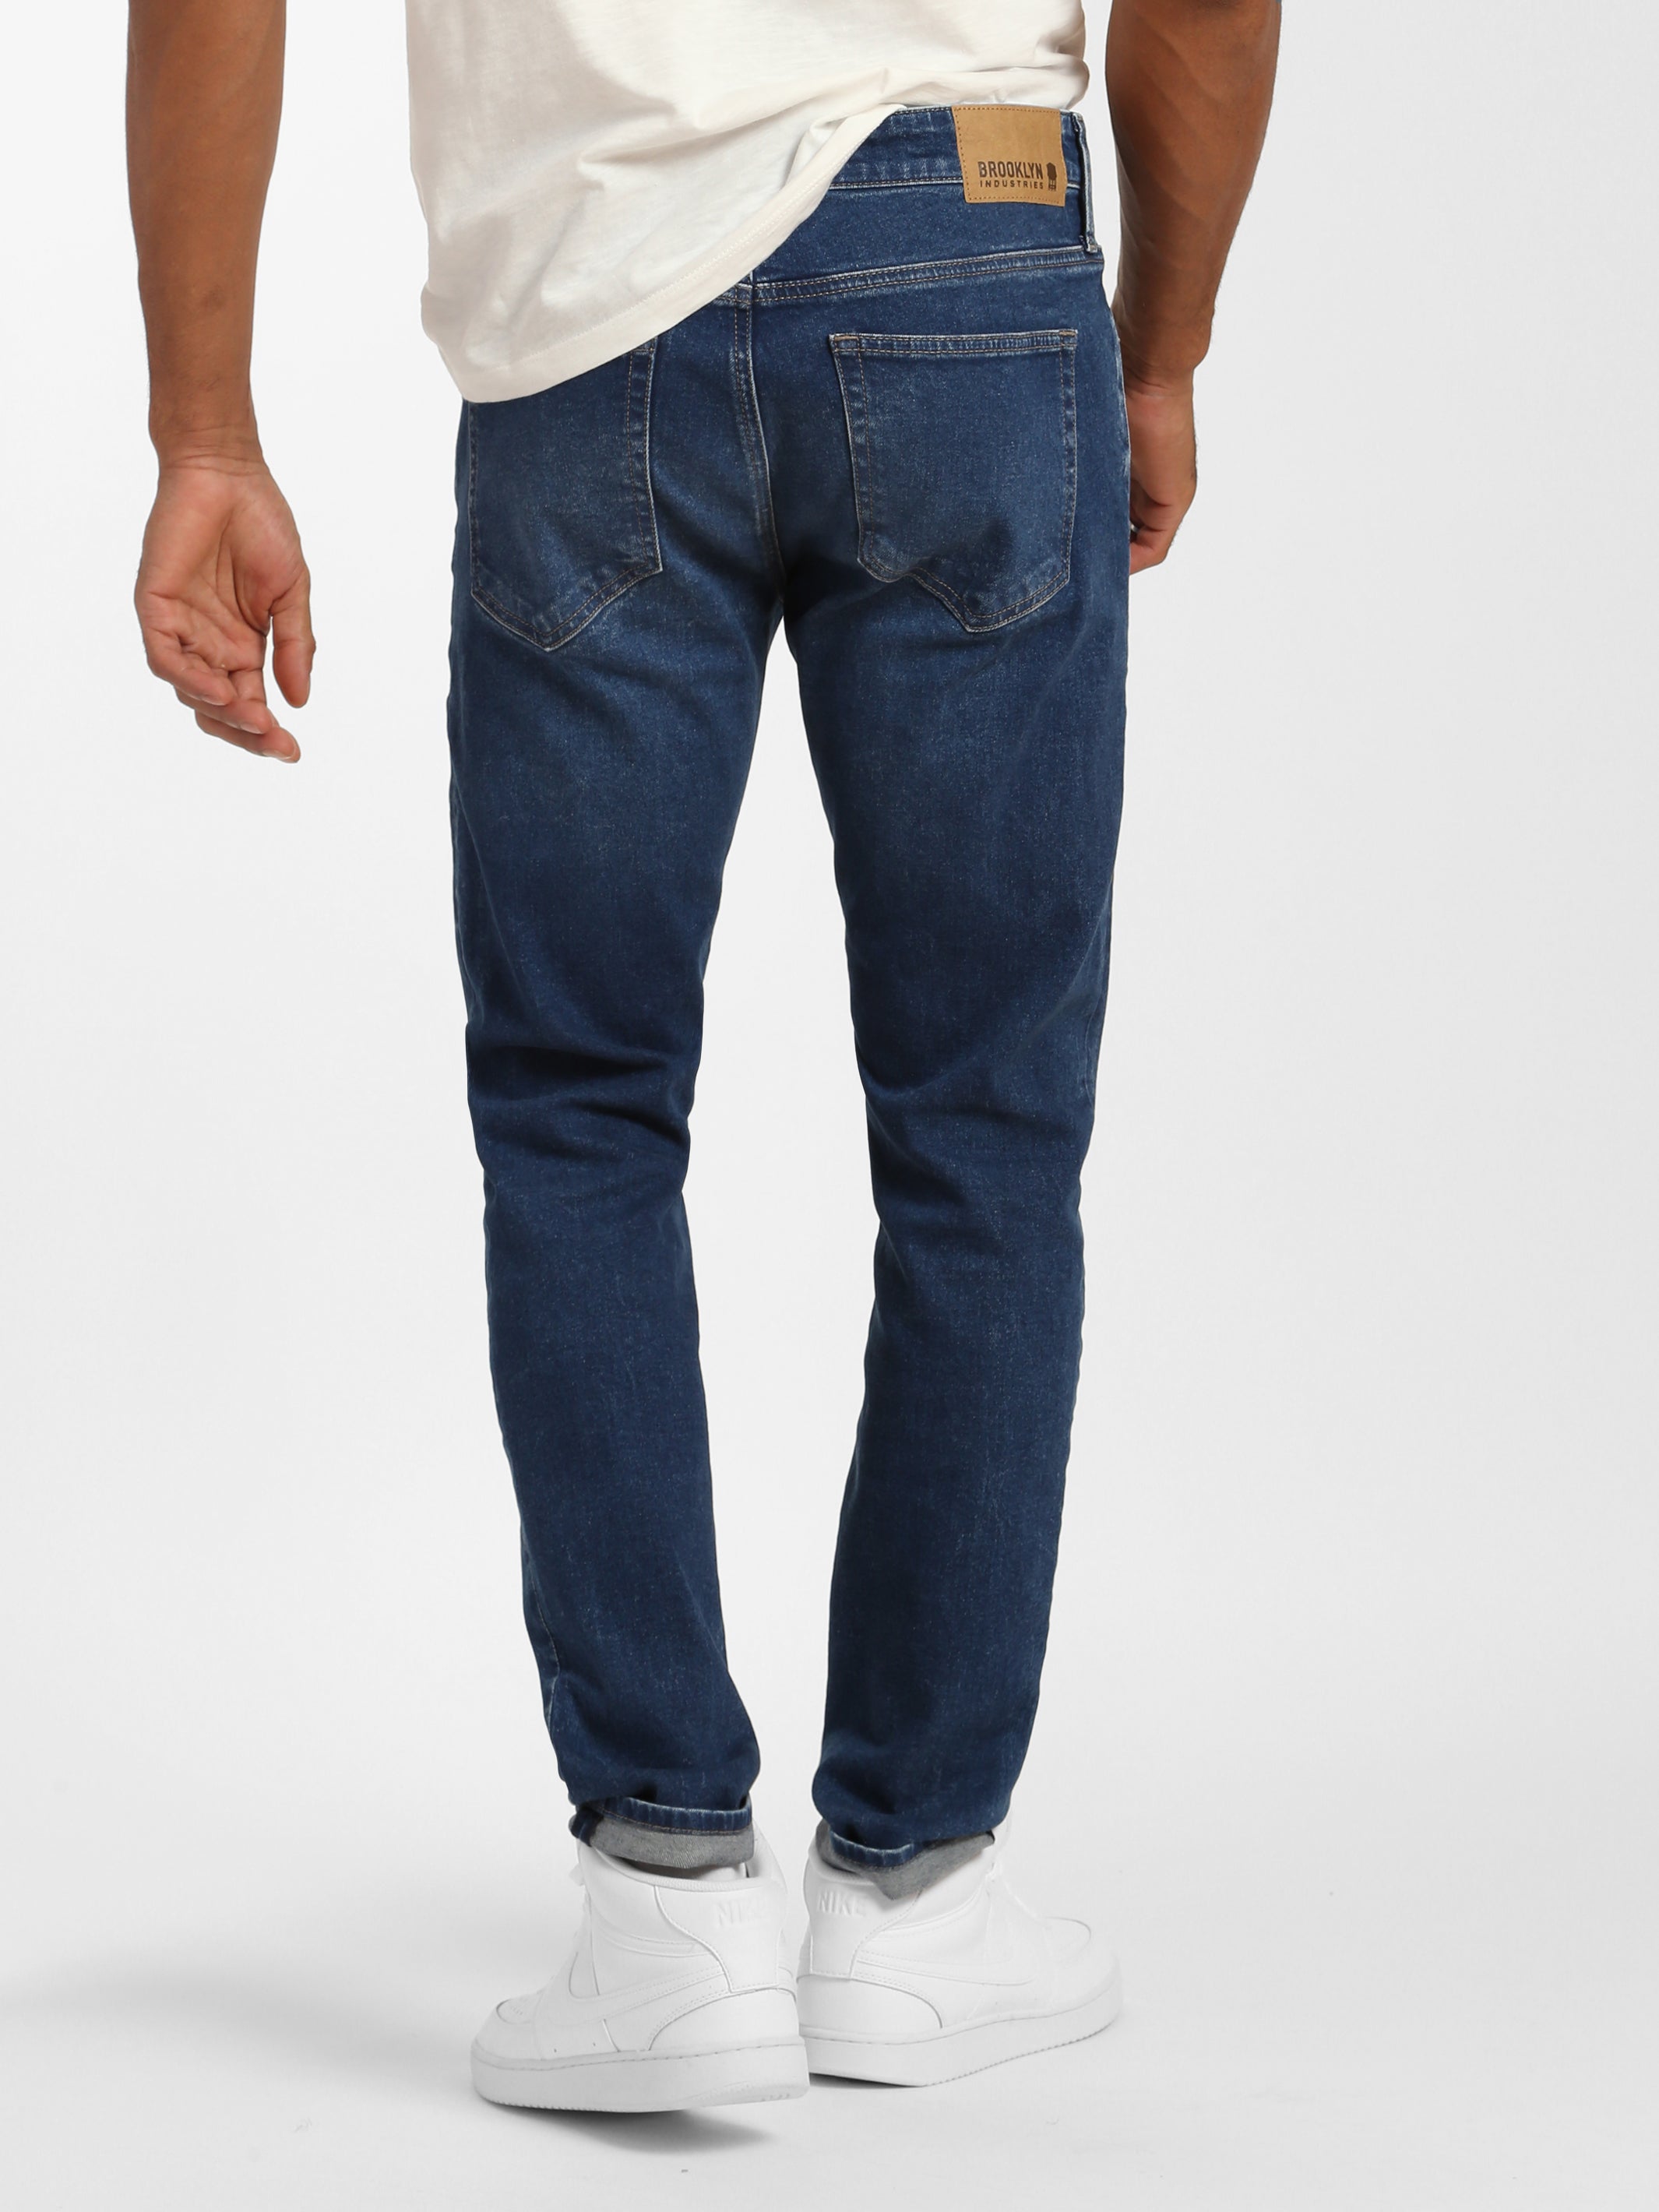 Clark Skinny Jeans in Dark Denim - BROOKLYN INDUSTRIES